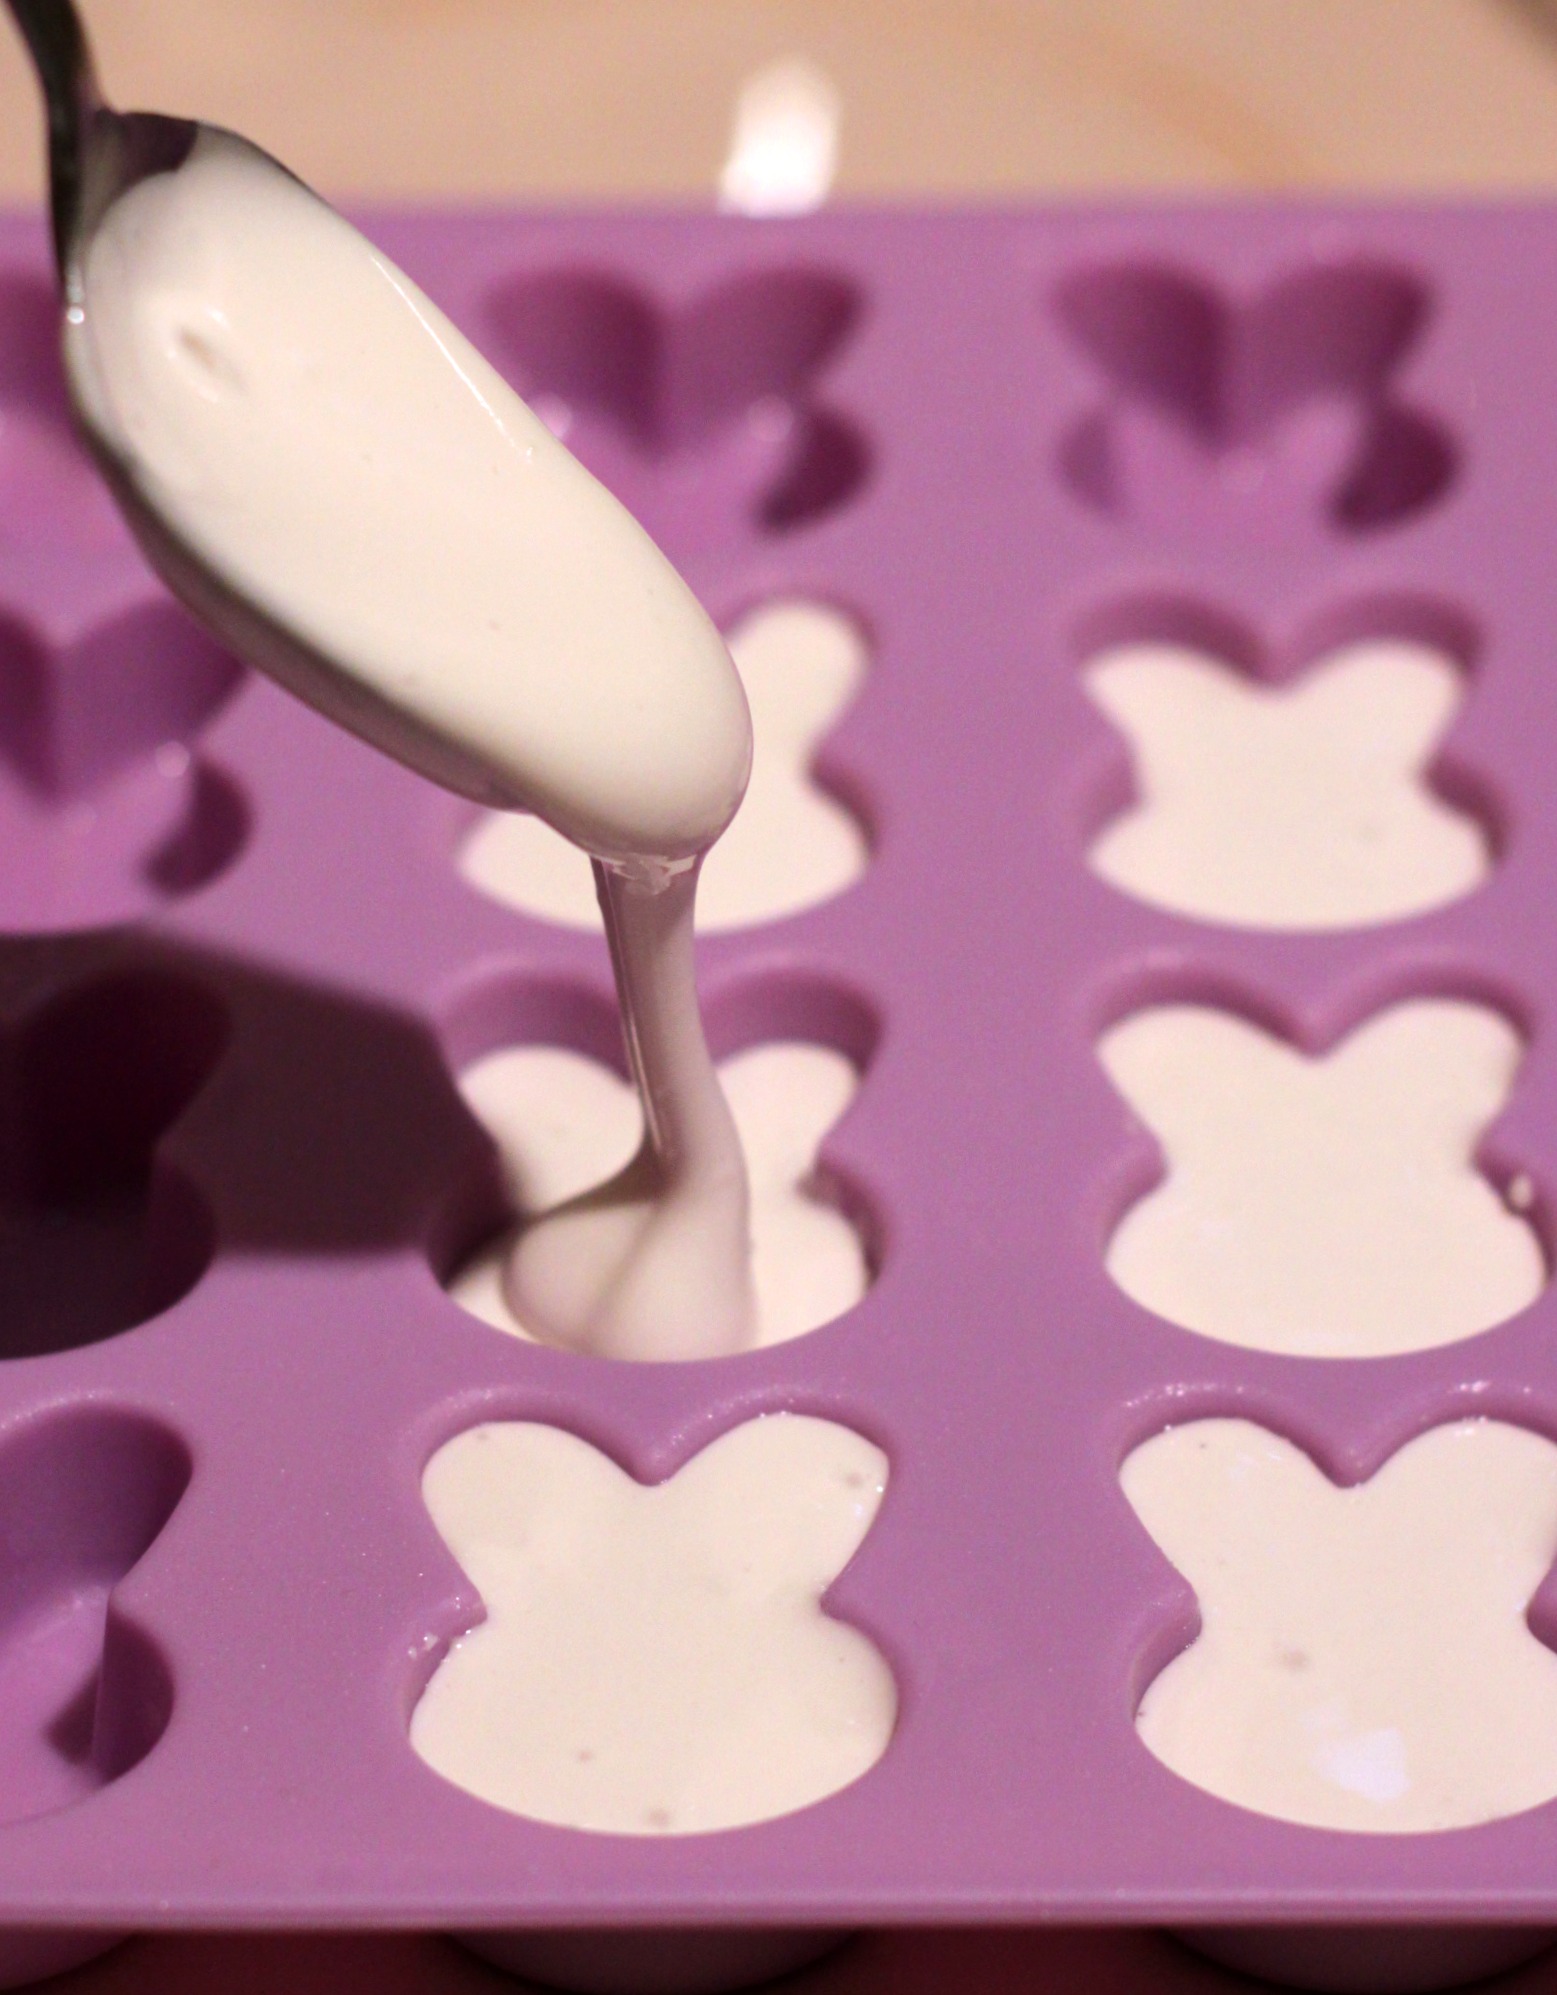 Pour marshmallow into silicone mold